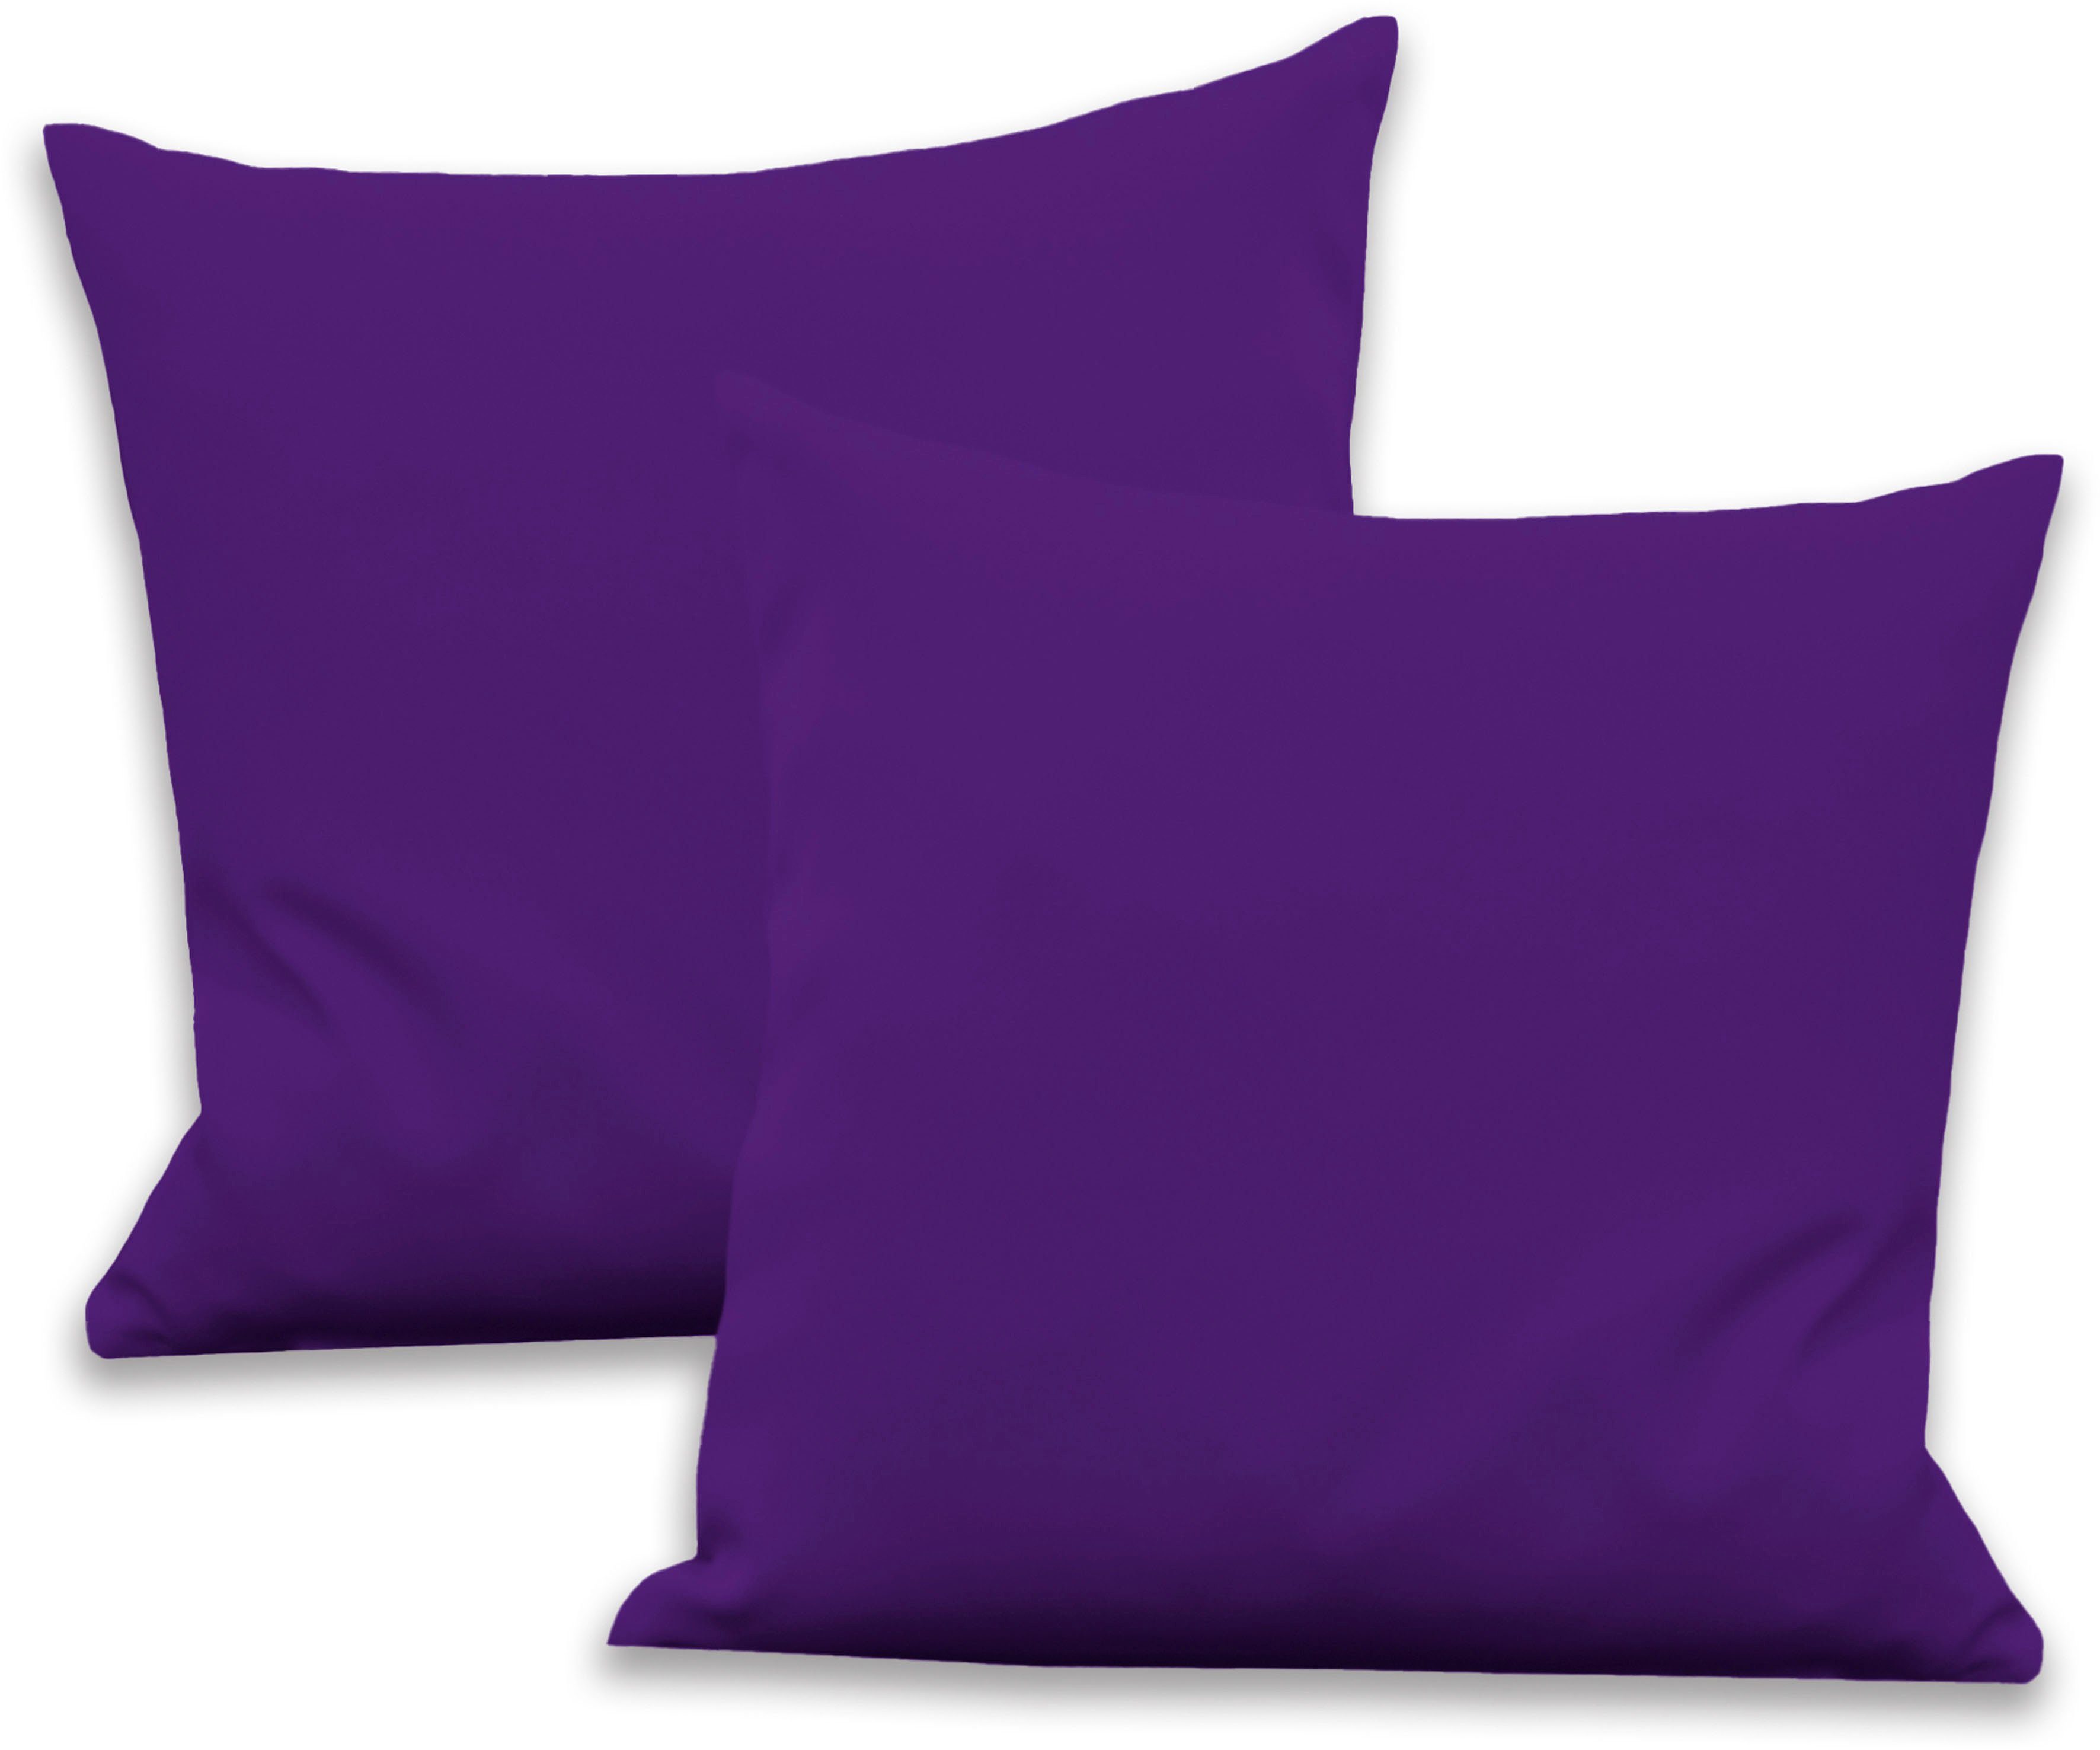 VHG Dekokissen Leon, Reißverschluss, Kissenhülle ohne Füllung, 2 Stück, unifarben violett